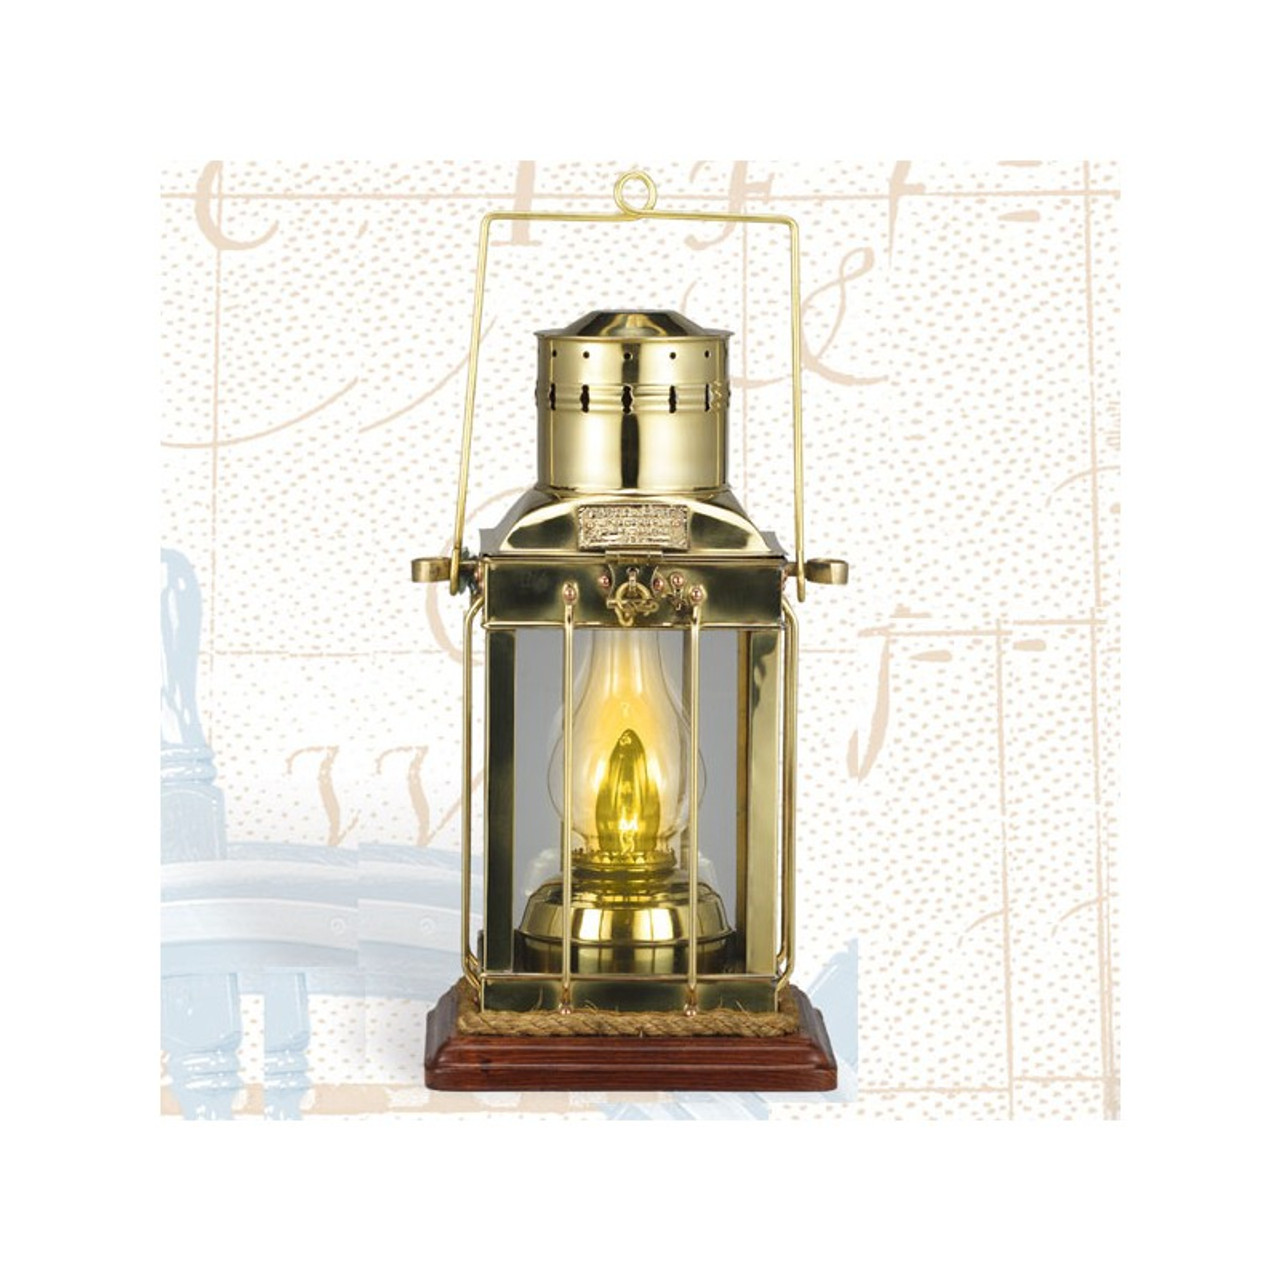 Electric Lantern - Ship Lantern Antique Brass Chiefs Lamp - 10